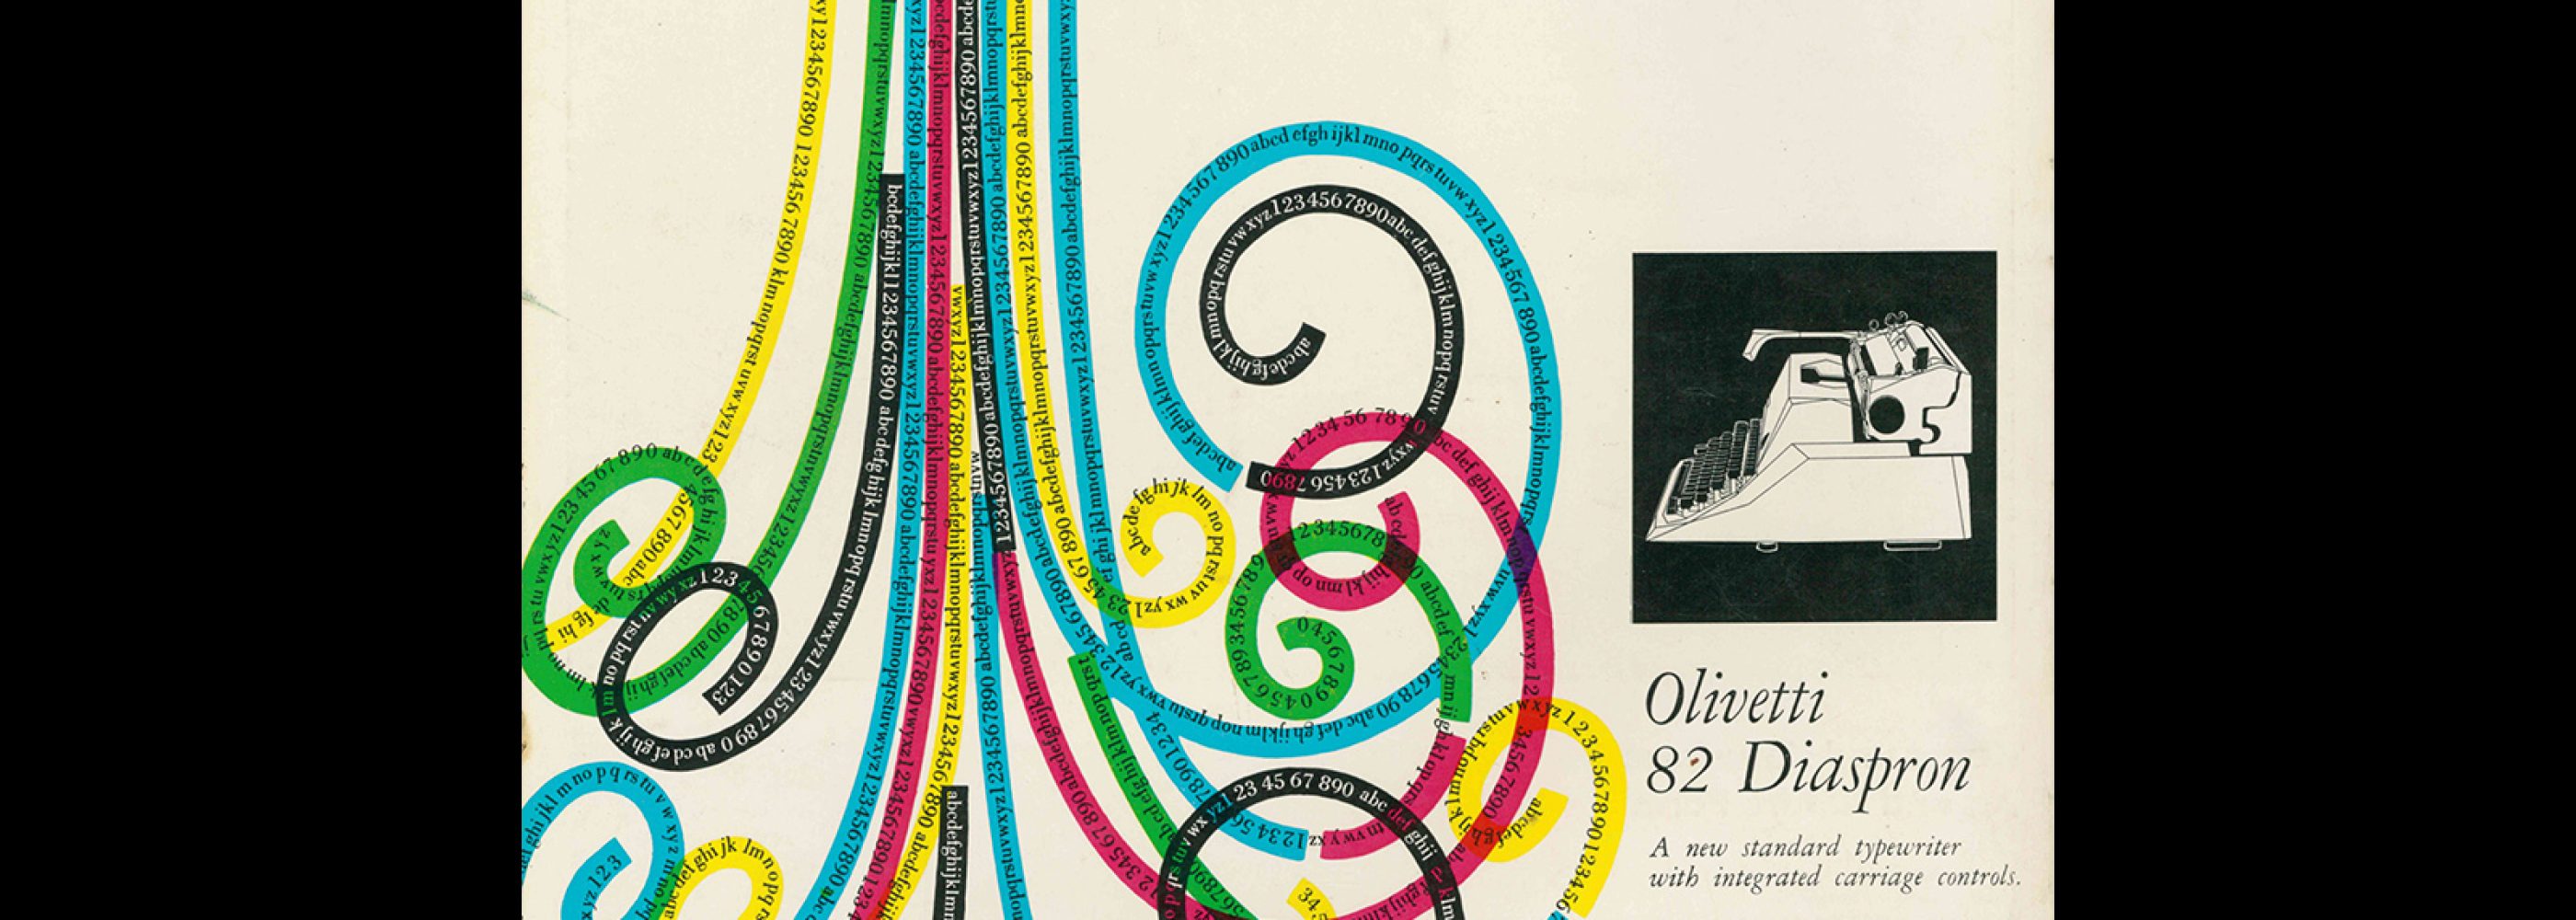 Olivetti Diaspron 82, Magazine Advertisement, 1959. Design by Giovanni Pintori.